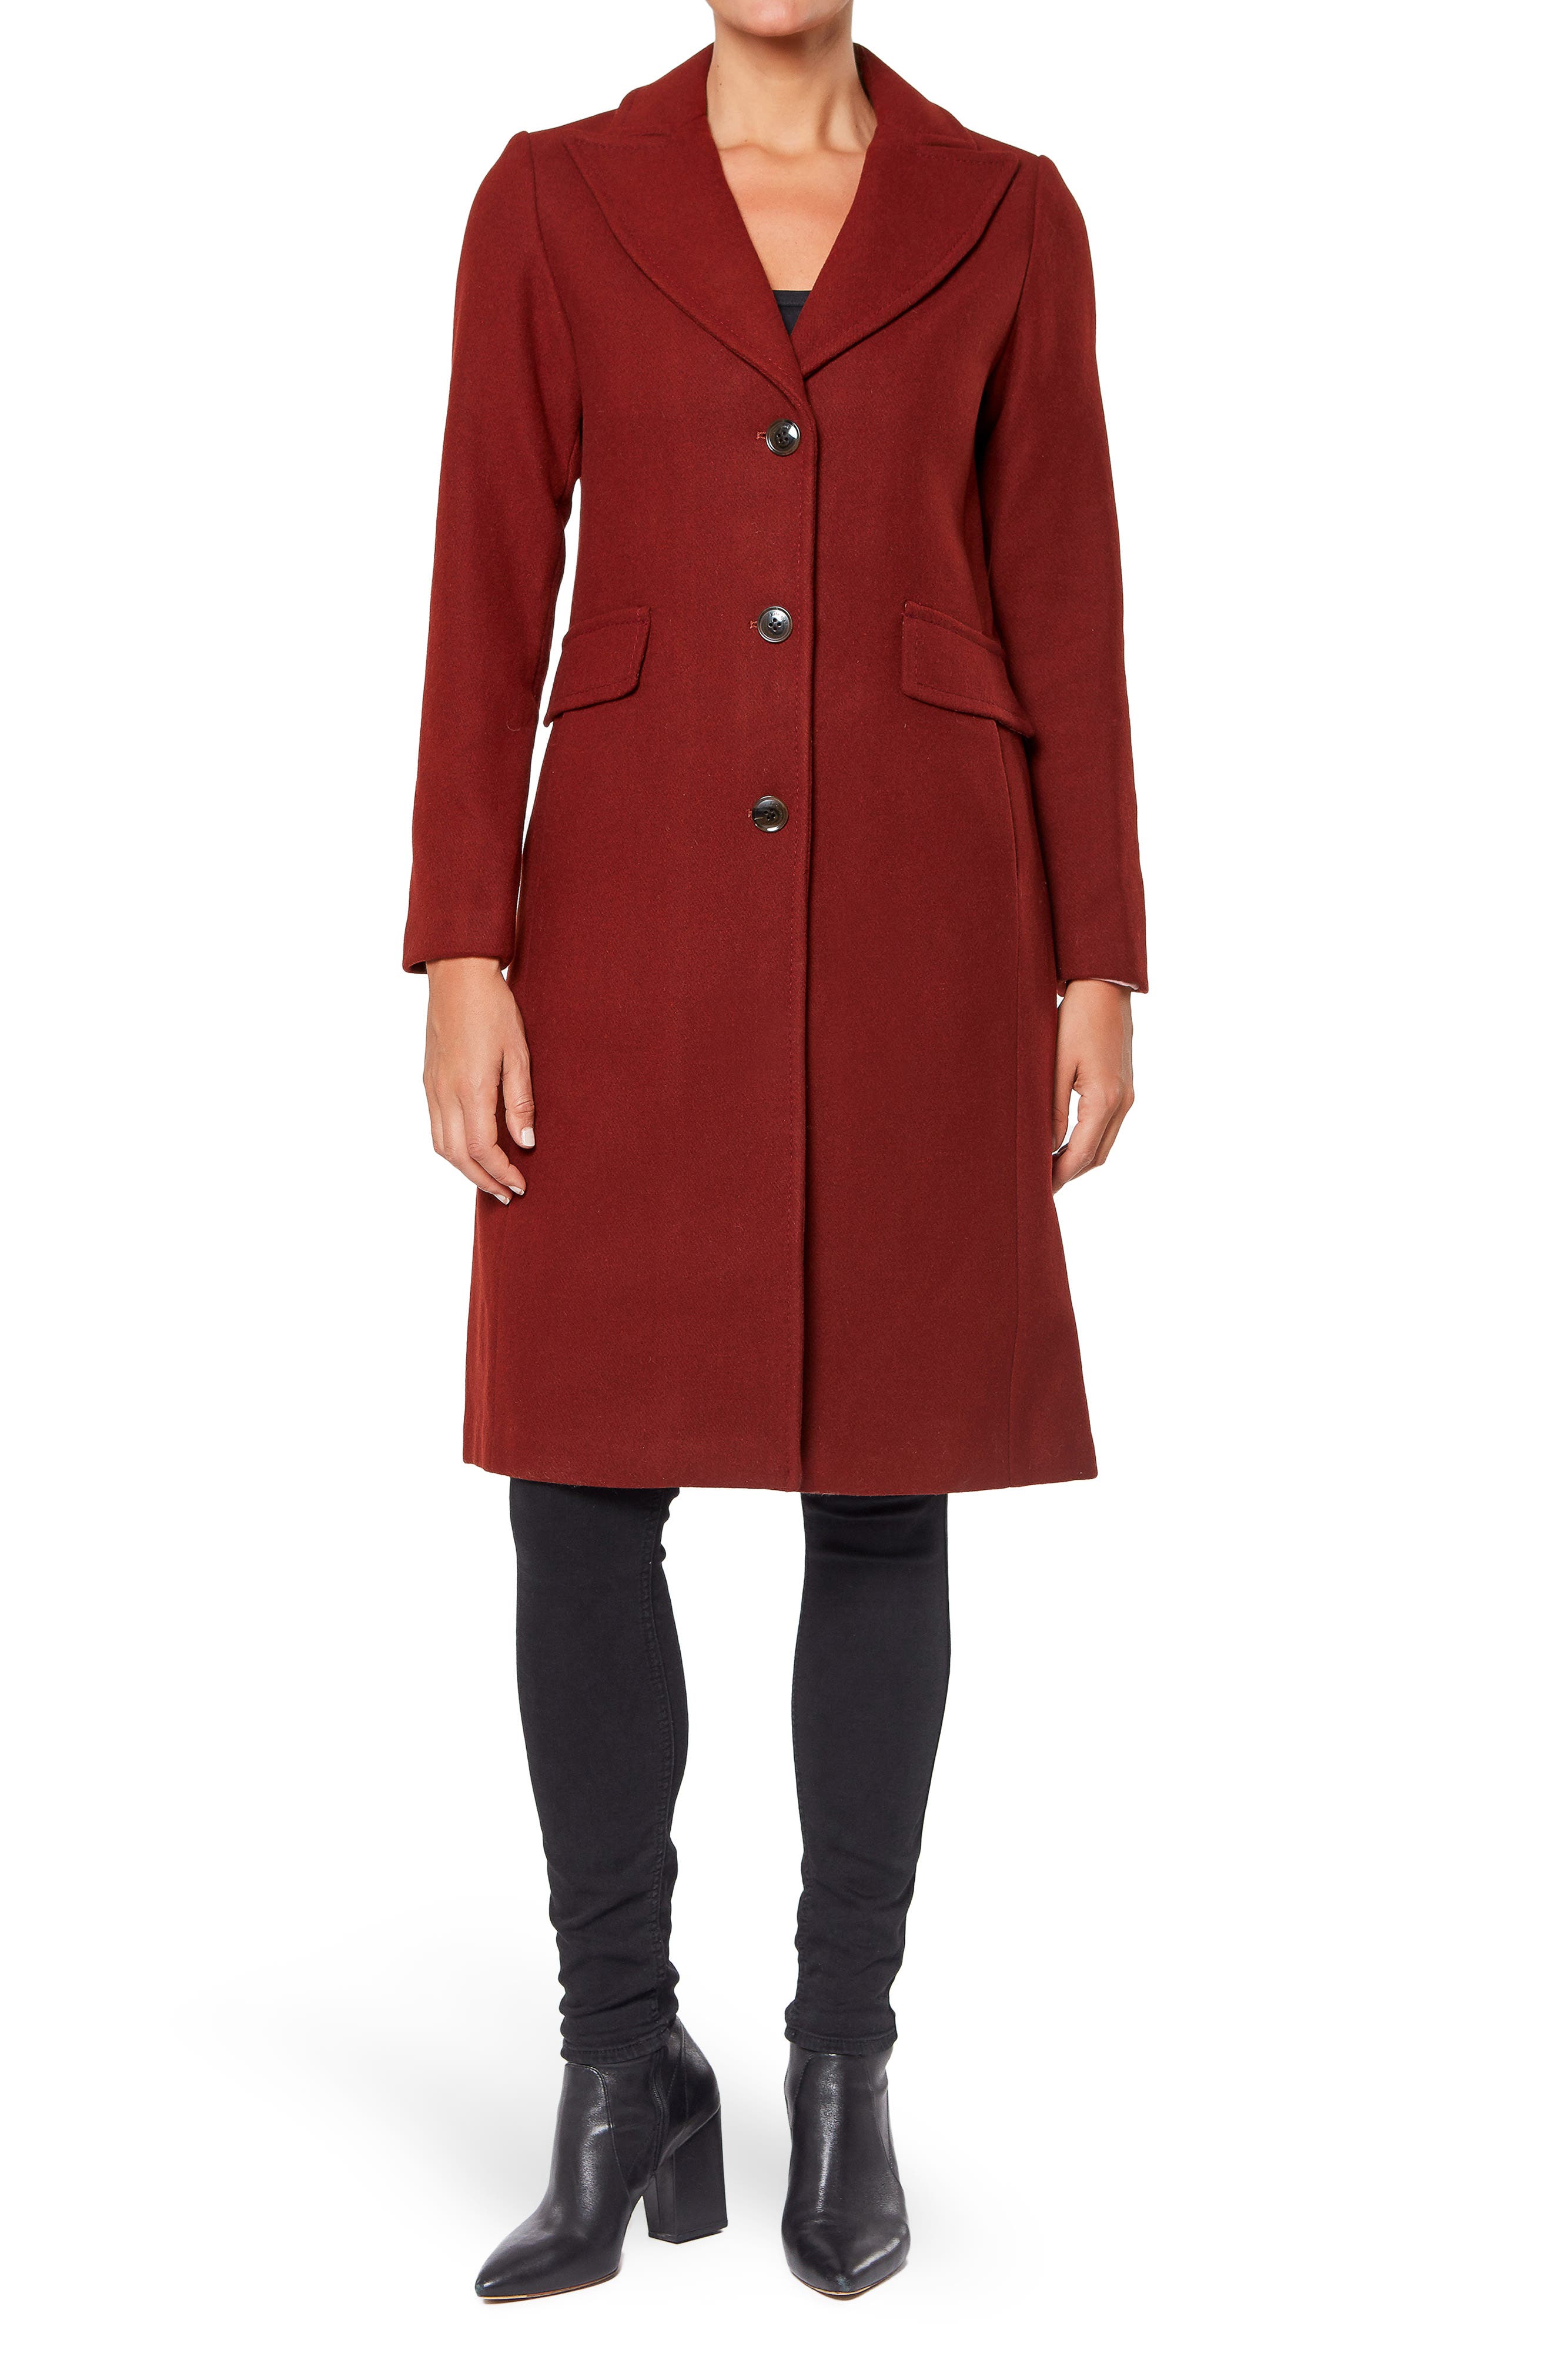 Sinpiling Women/'s Turn Down Shawl Collar Wool Blend Coat Winter Fashion Belted Trench Outerwear Asymmetric Hem Wrap Coat